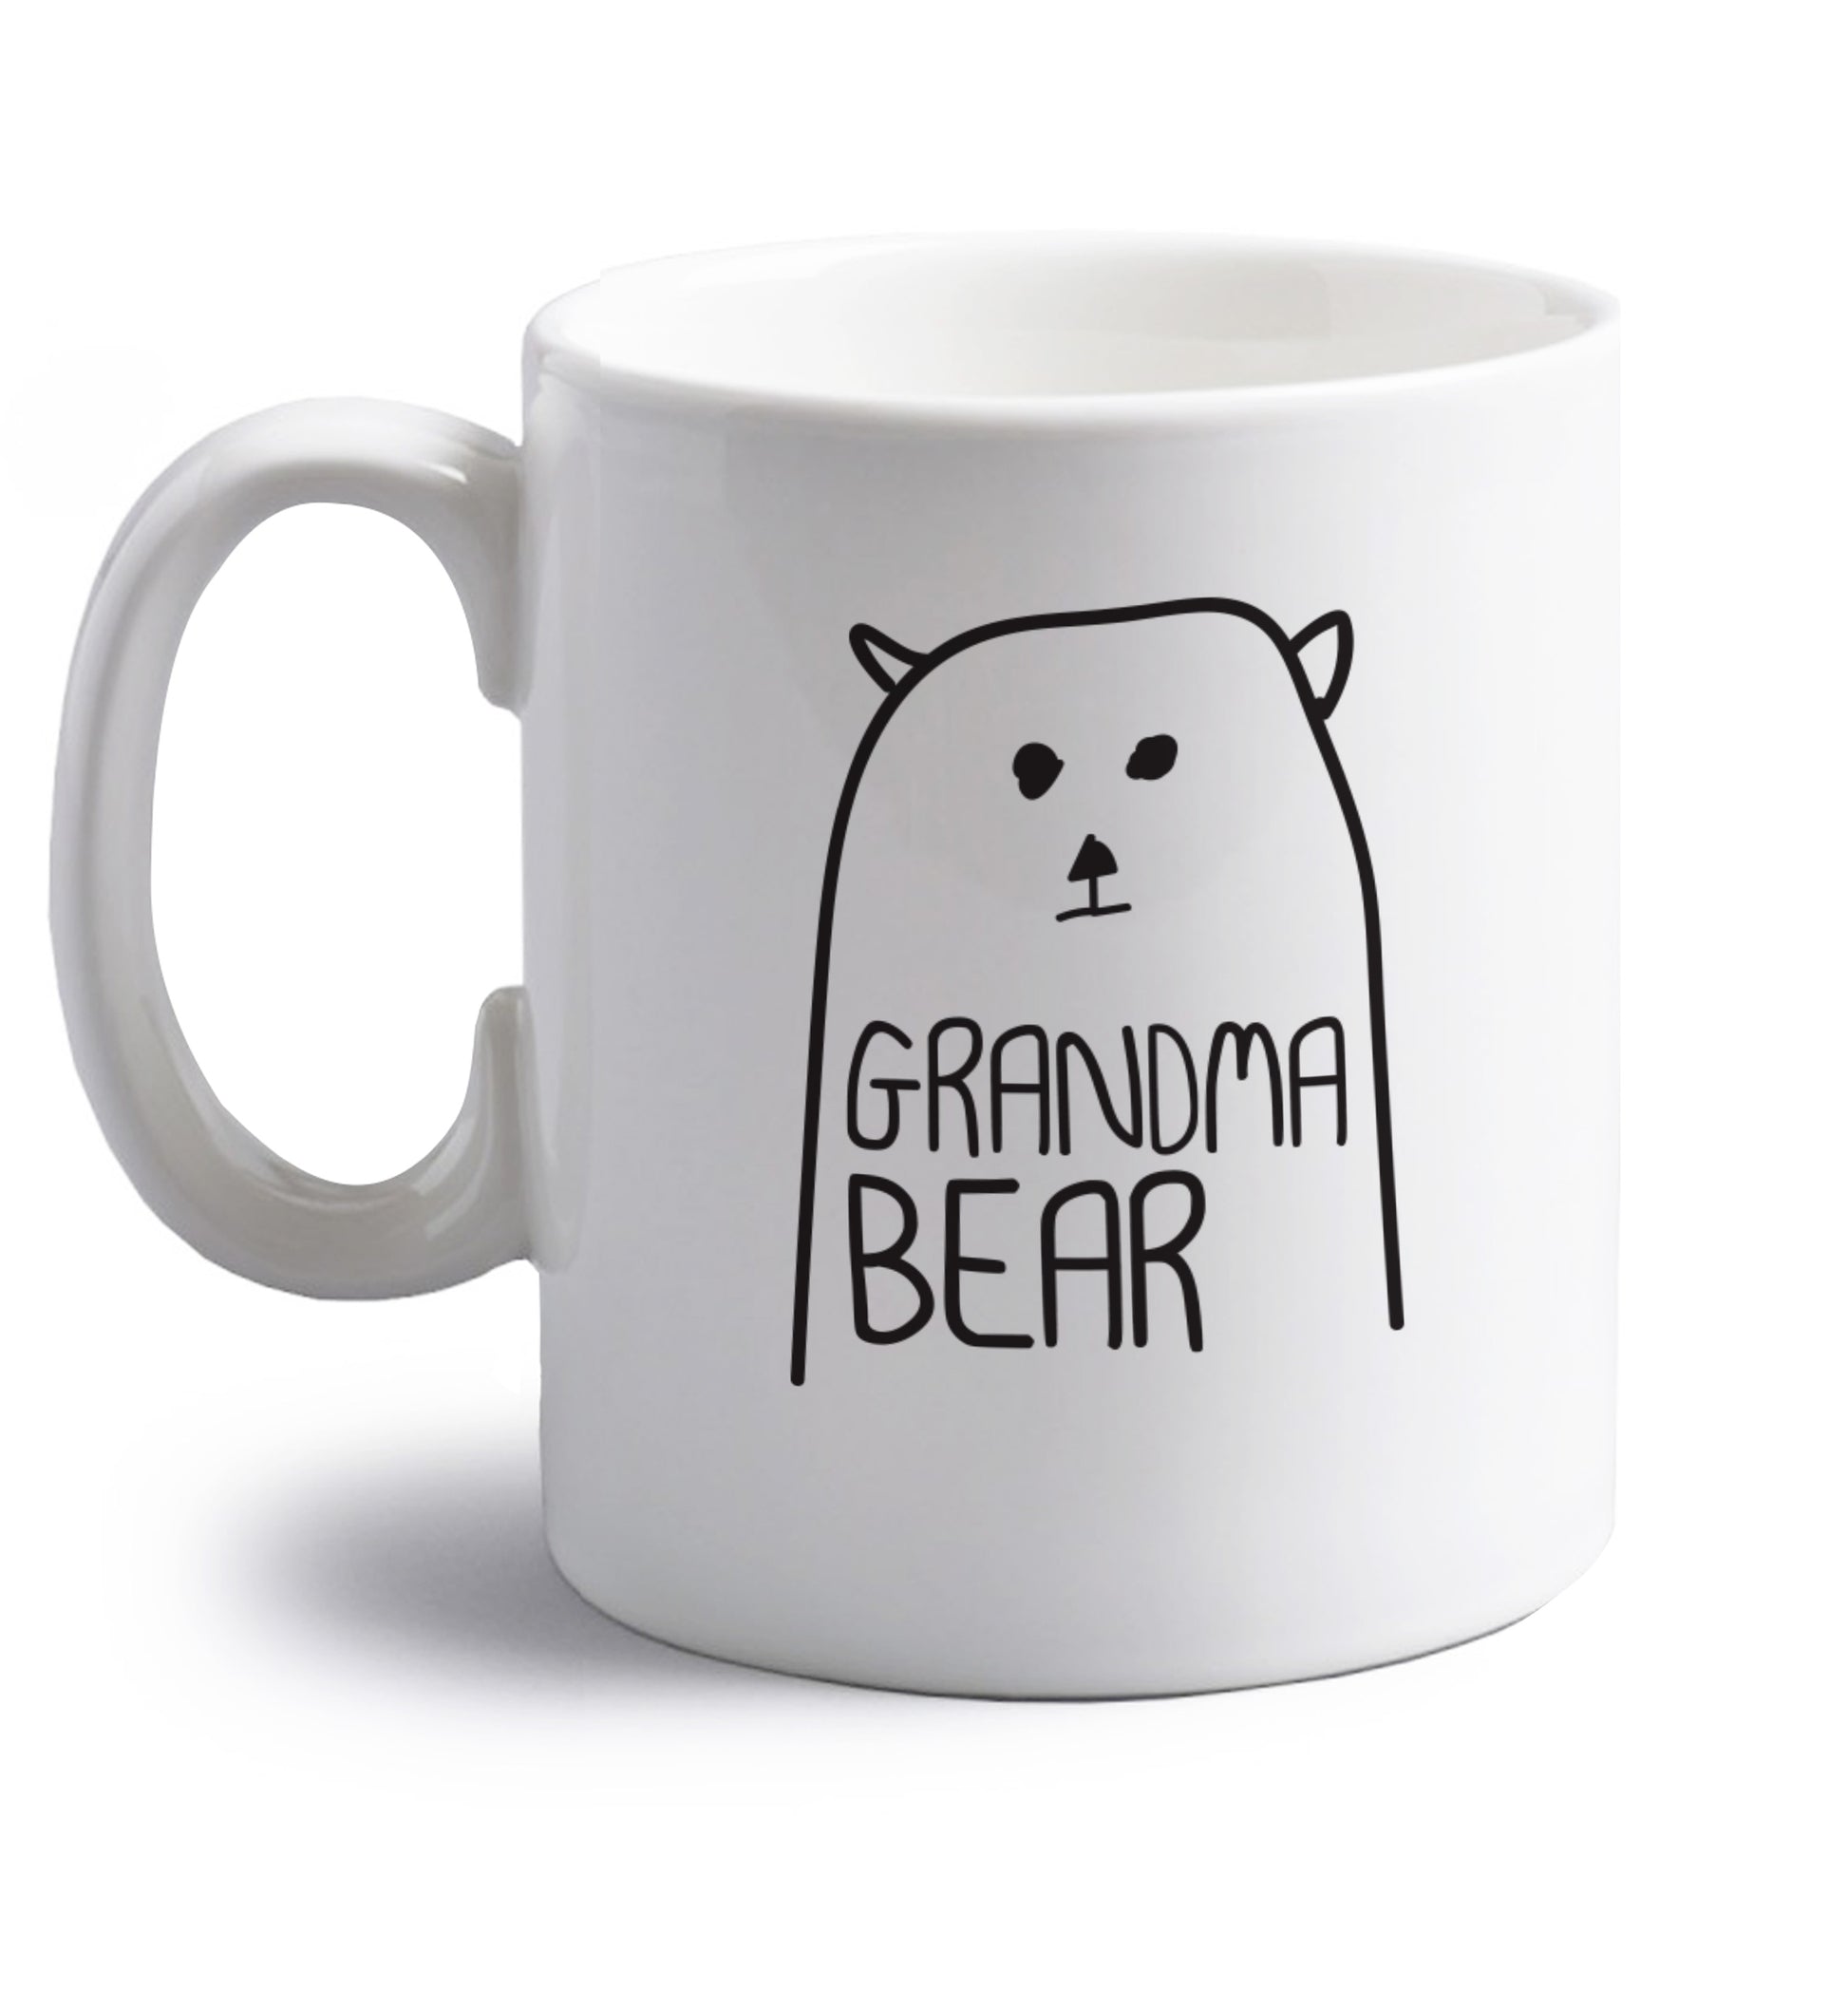 Grandma bear right handed white ceramic mug 